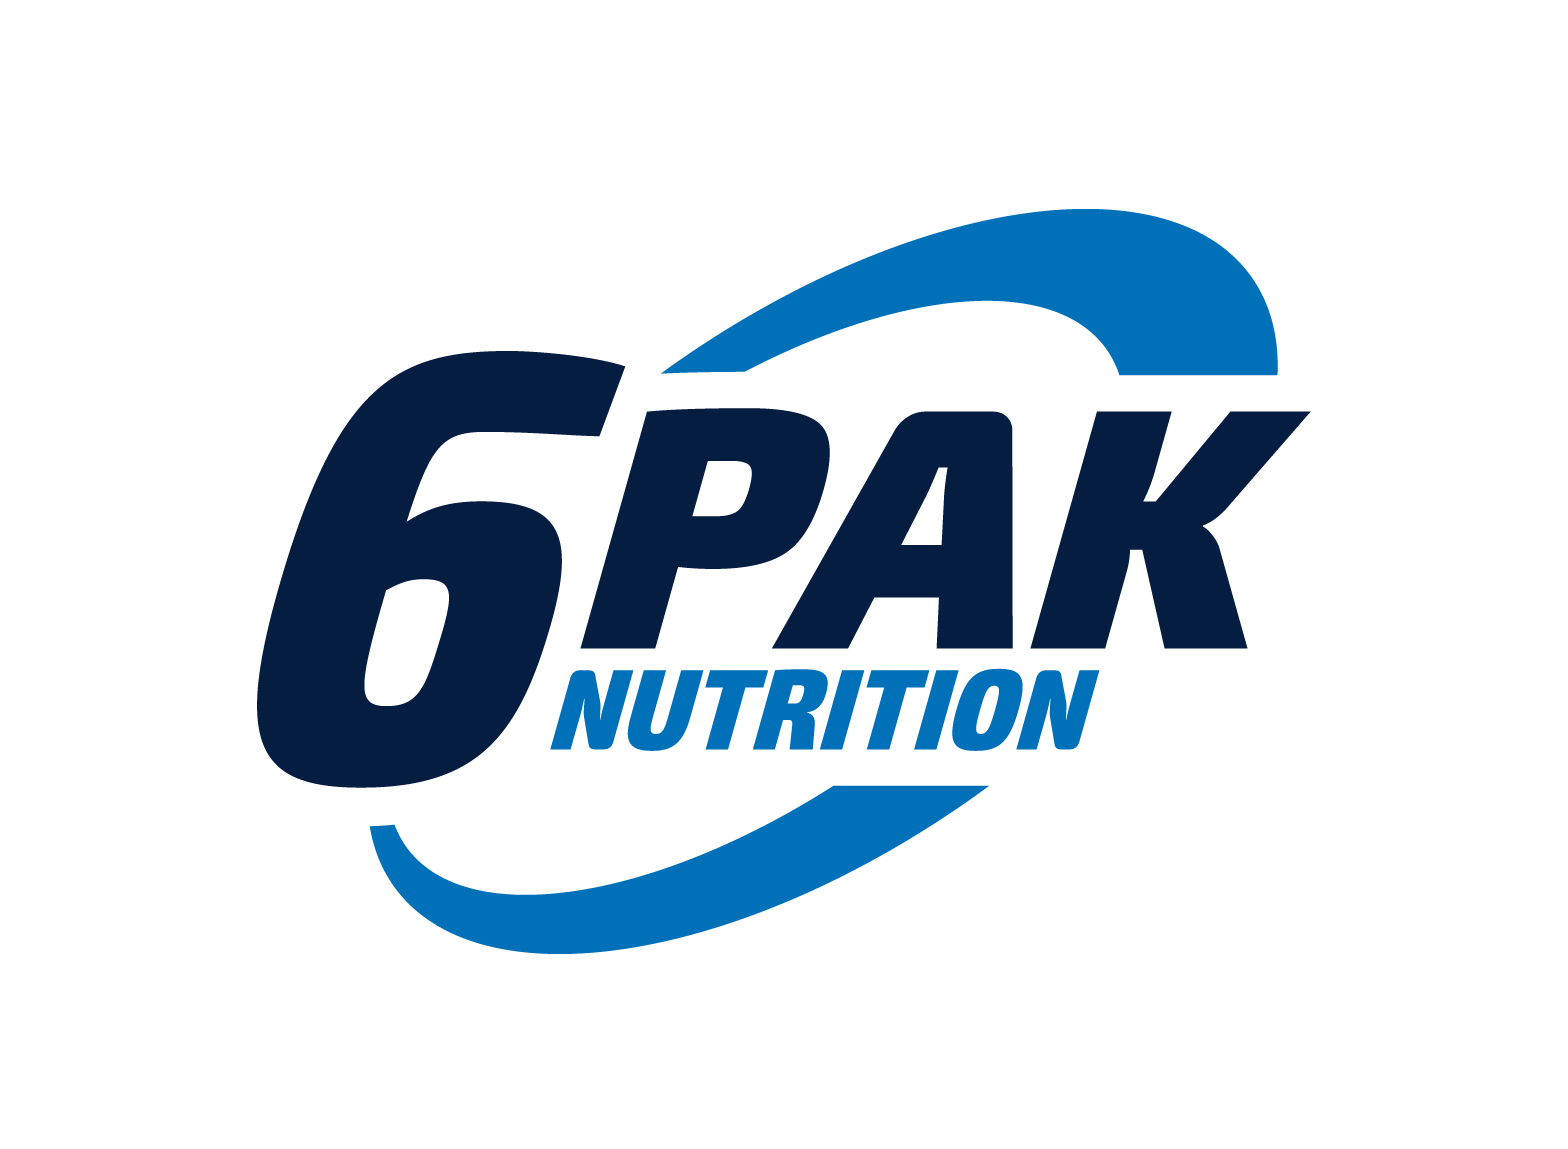 6Pak Nutrition